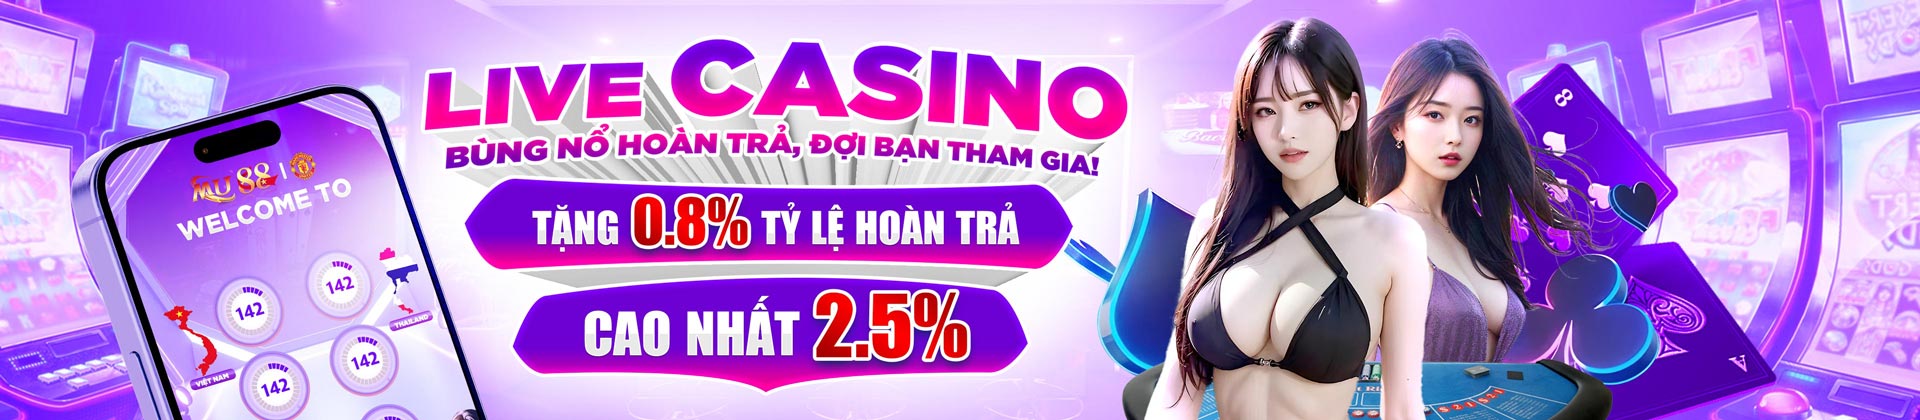 live-casino-tang-hoan-tra